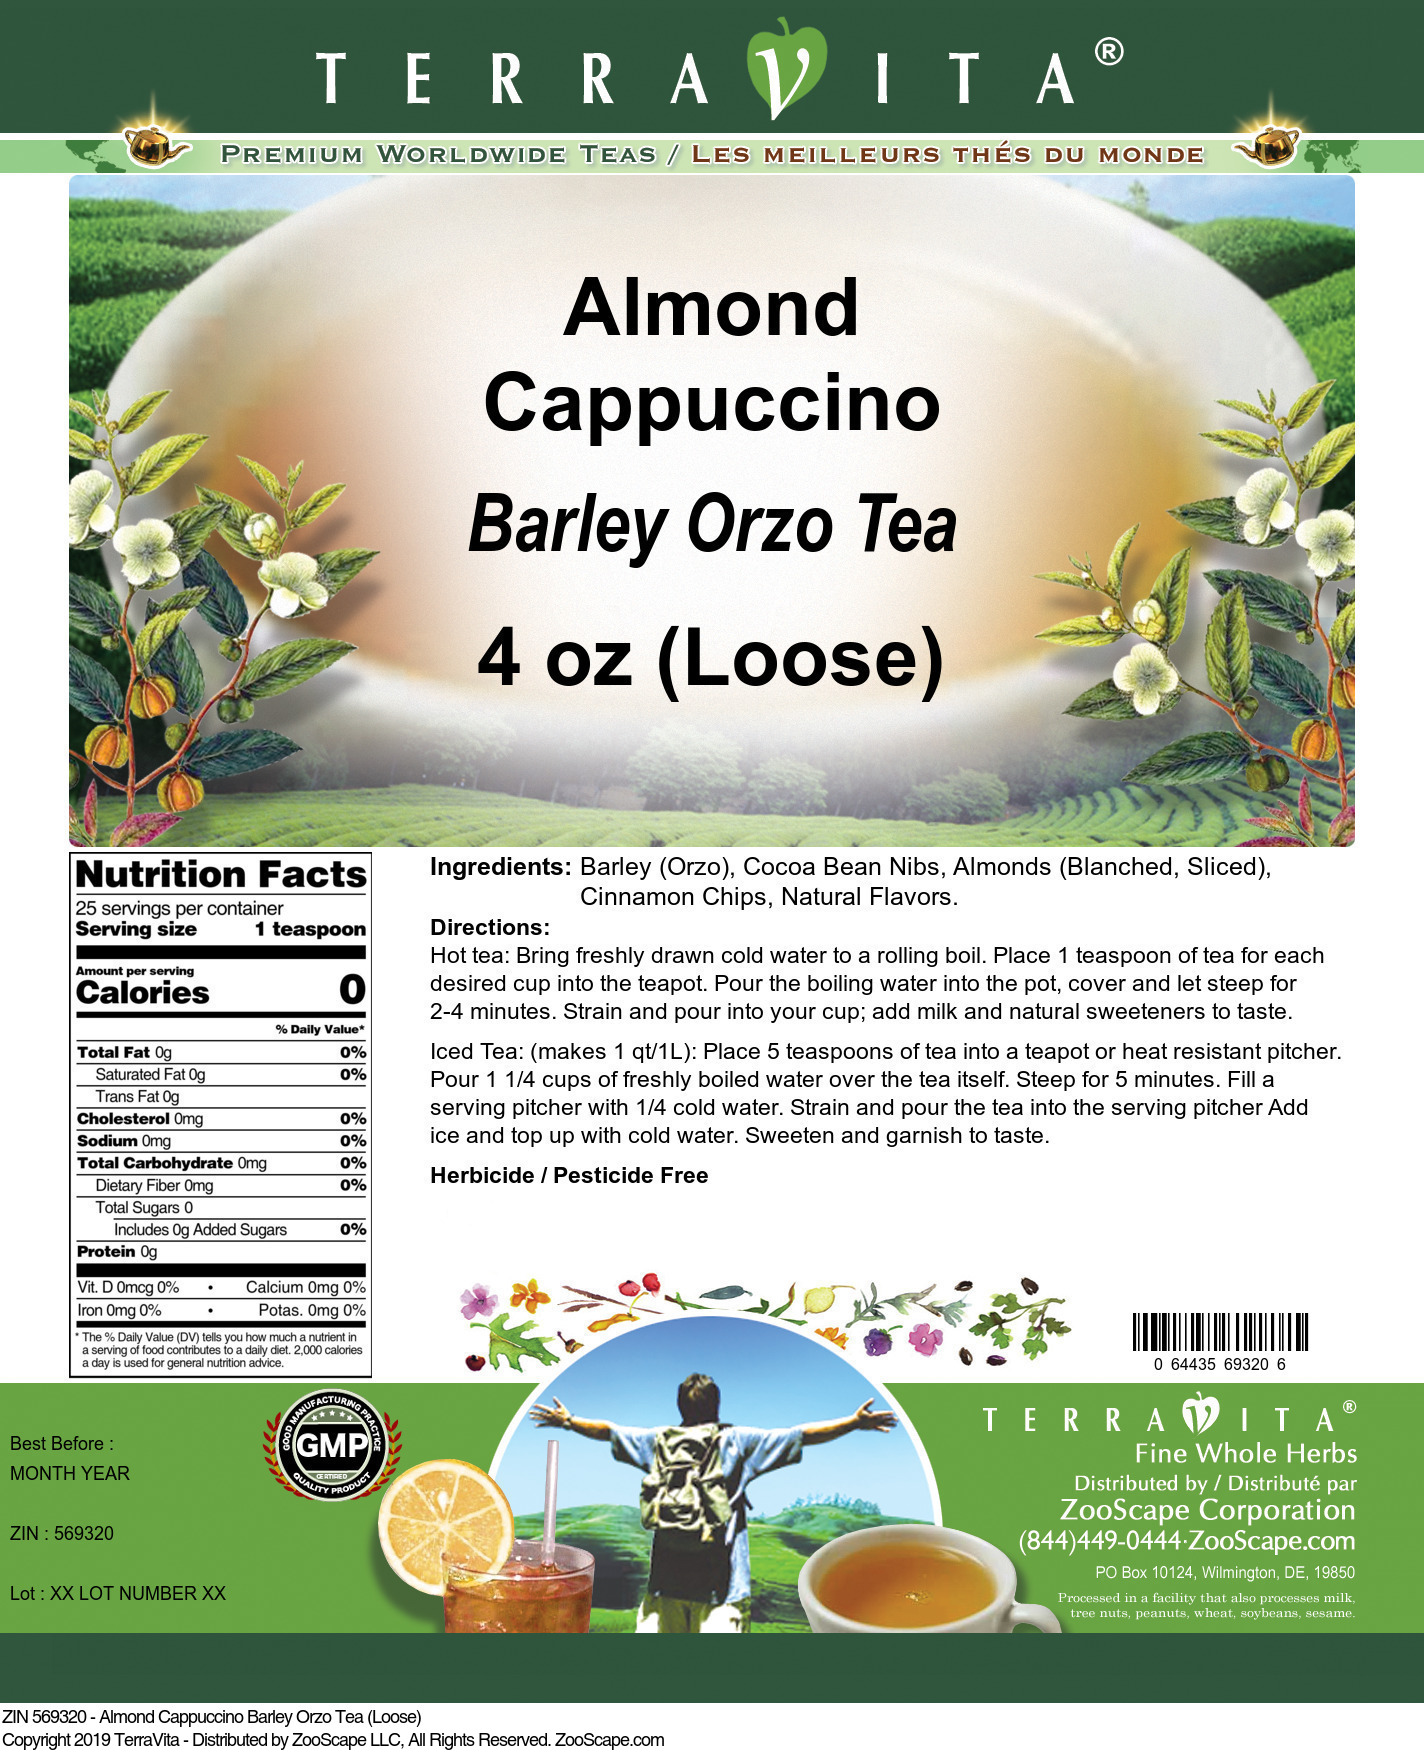 Almond Cappuccino Barley Orzo Tea (Loose) - Label